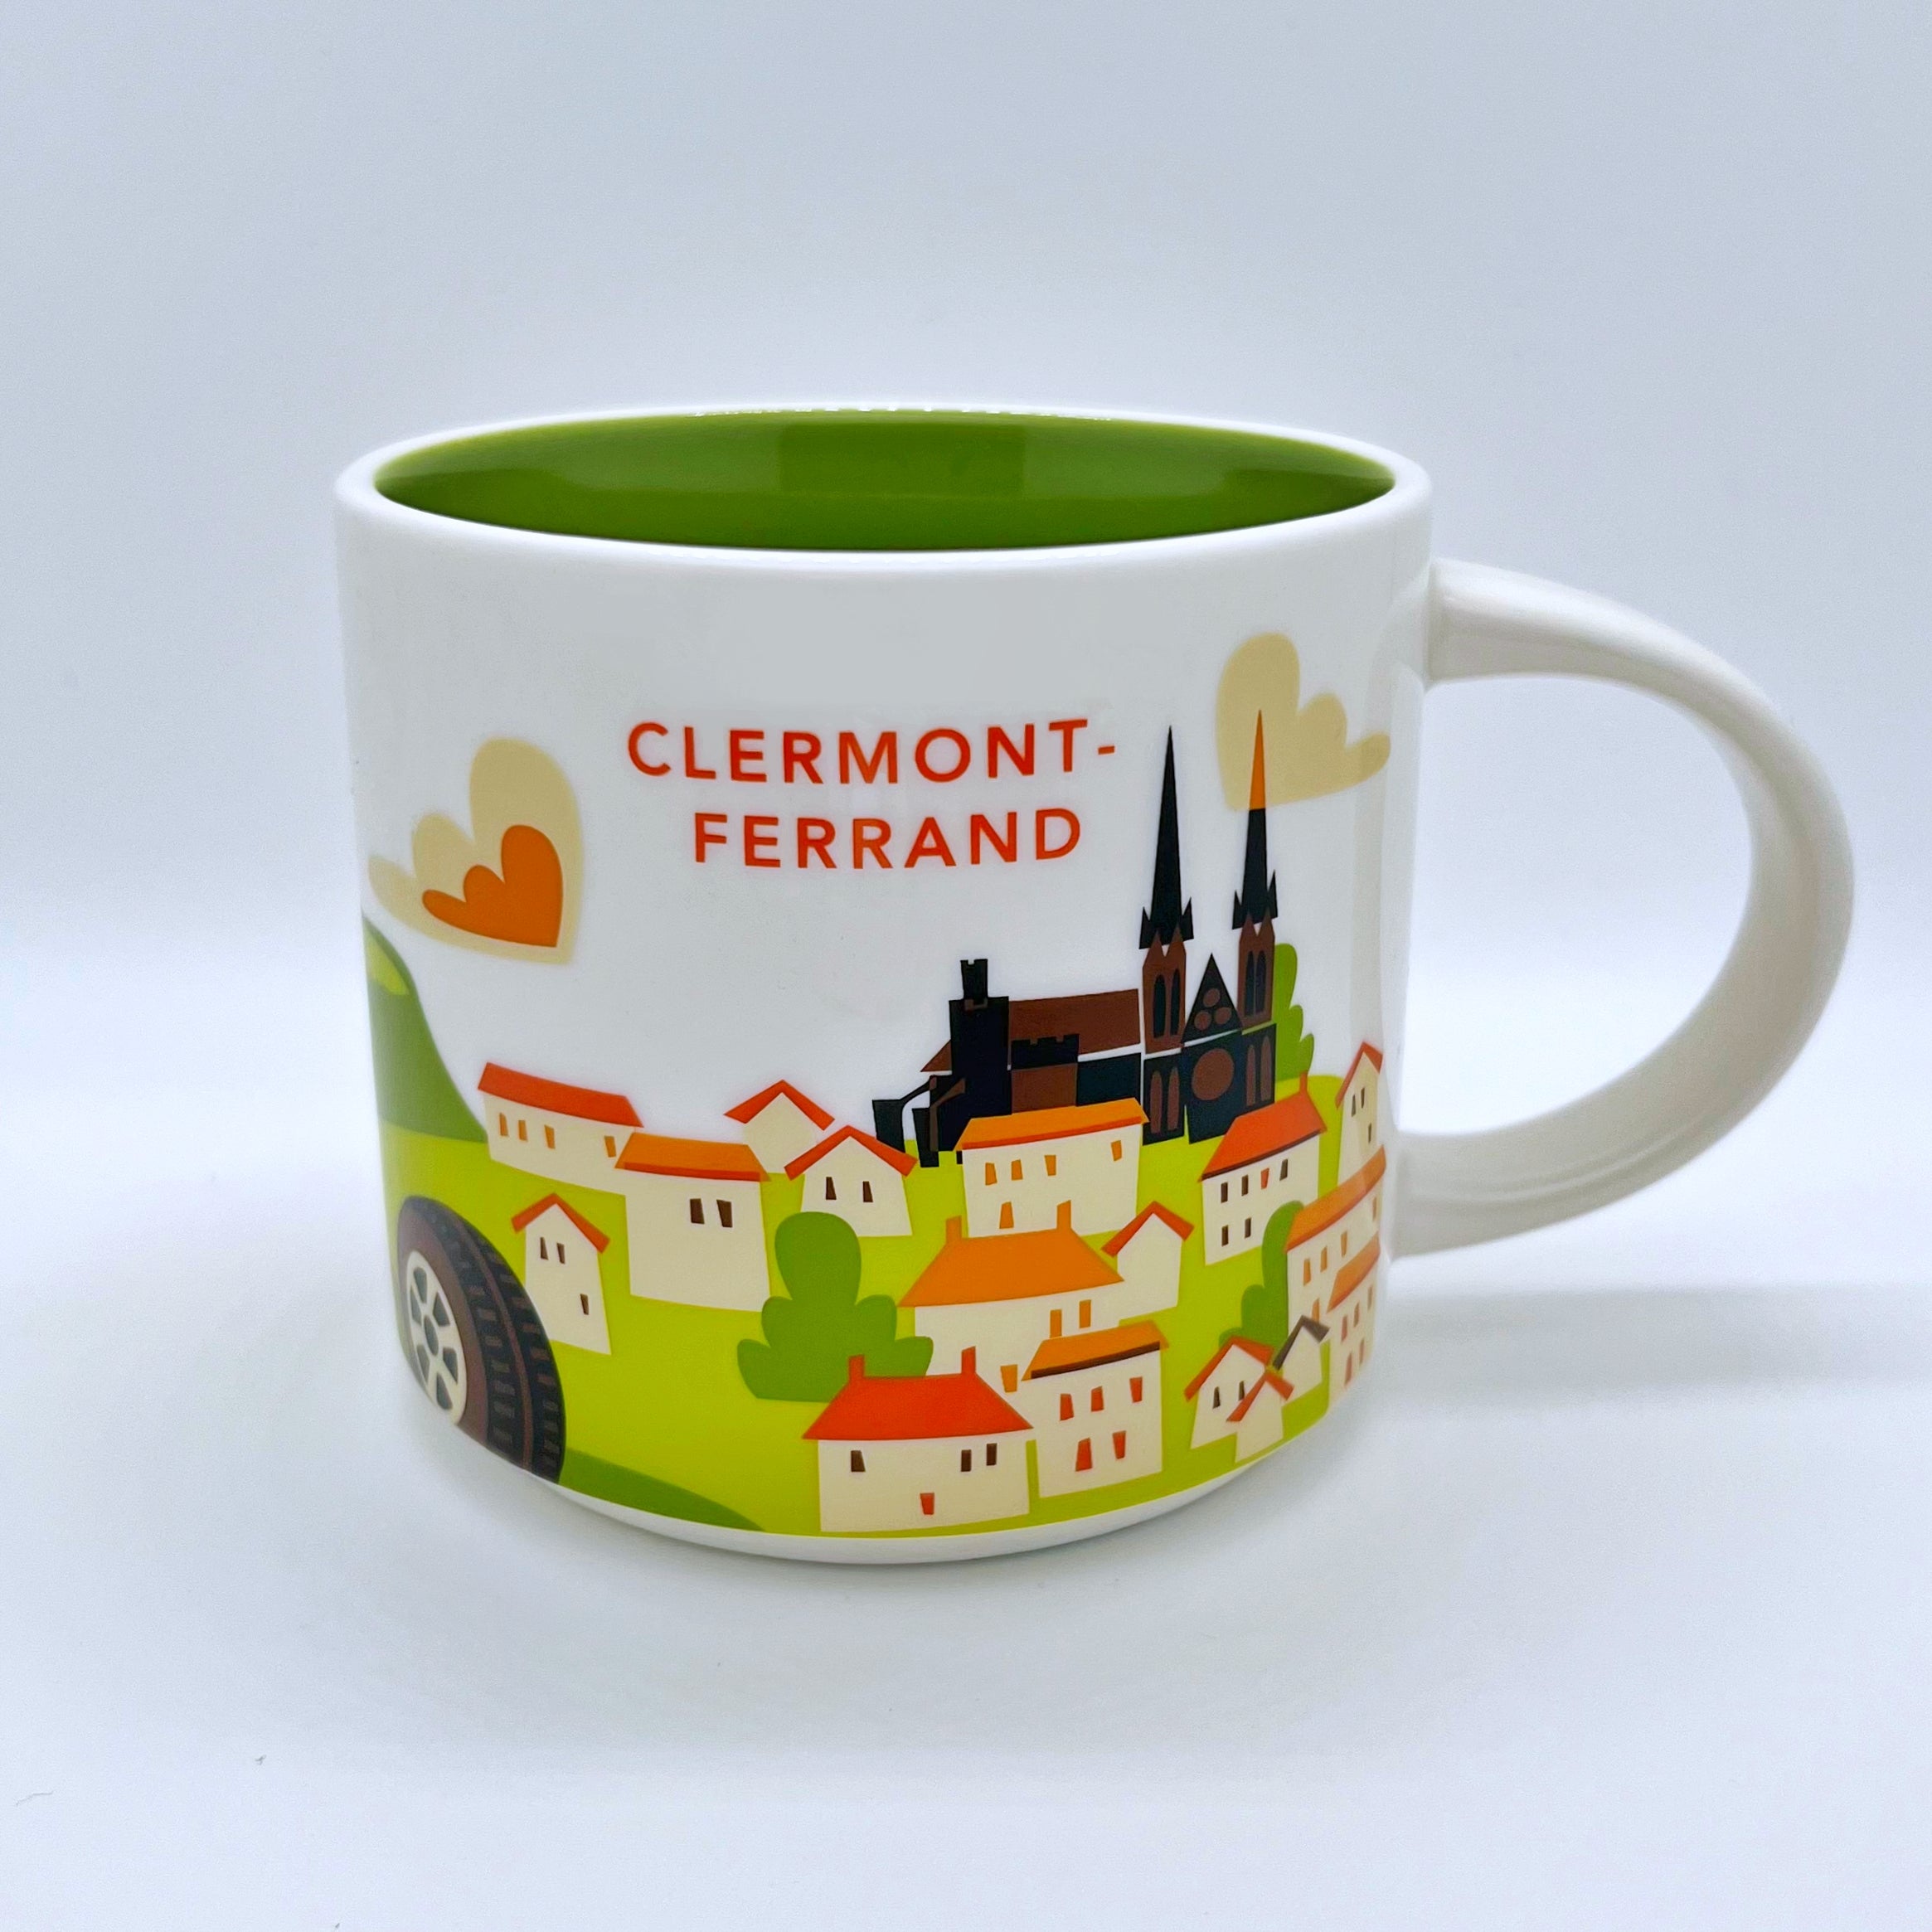 Clermont-Ferrand City Kaffee Tasse